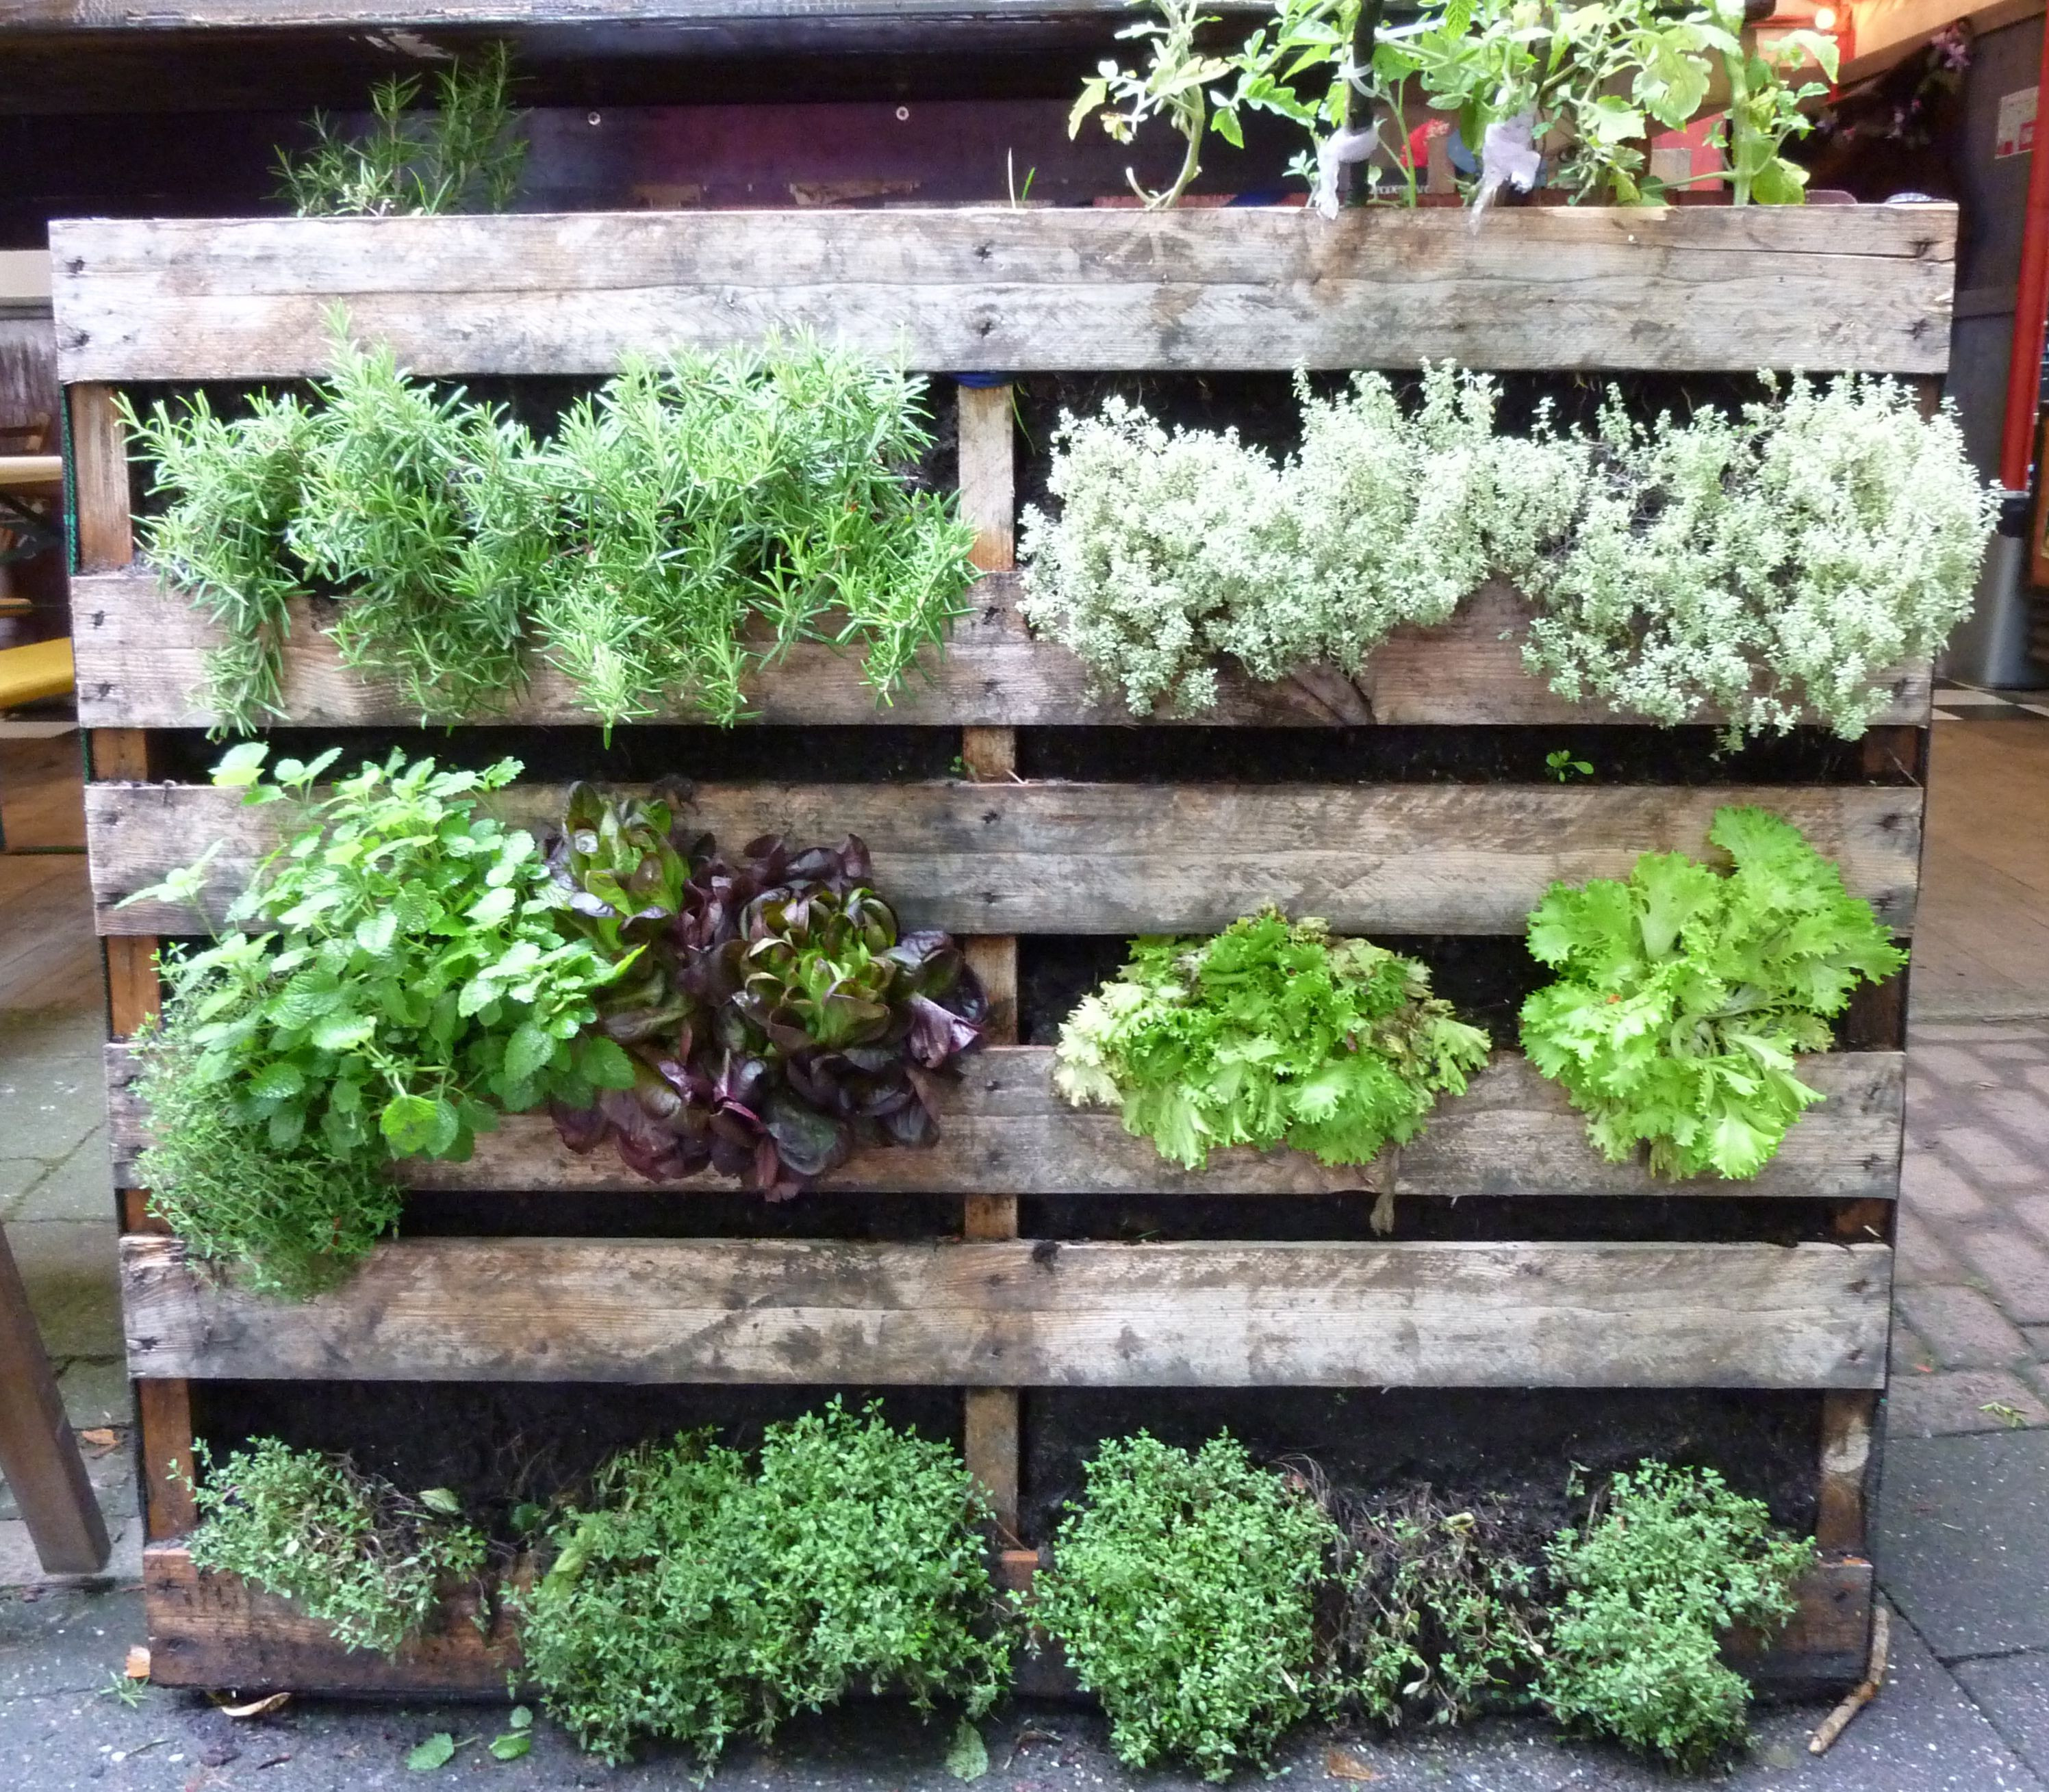 Best ideas about Creative Garden Ideas
. Save or Pin 10 Creative Ve able Garden Ideas Now.